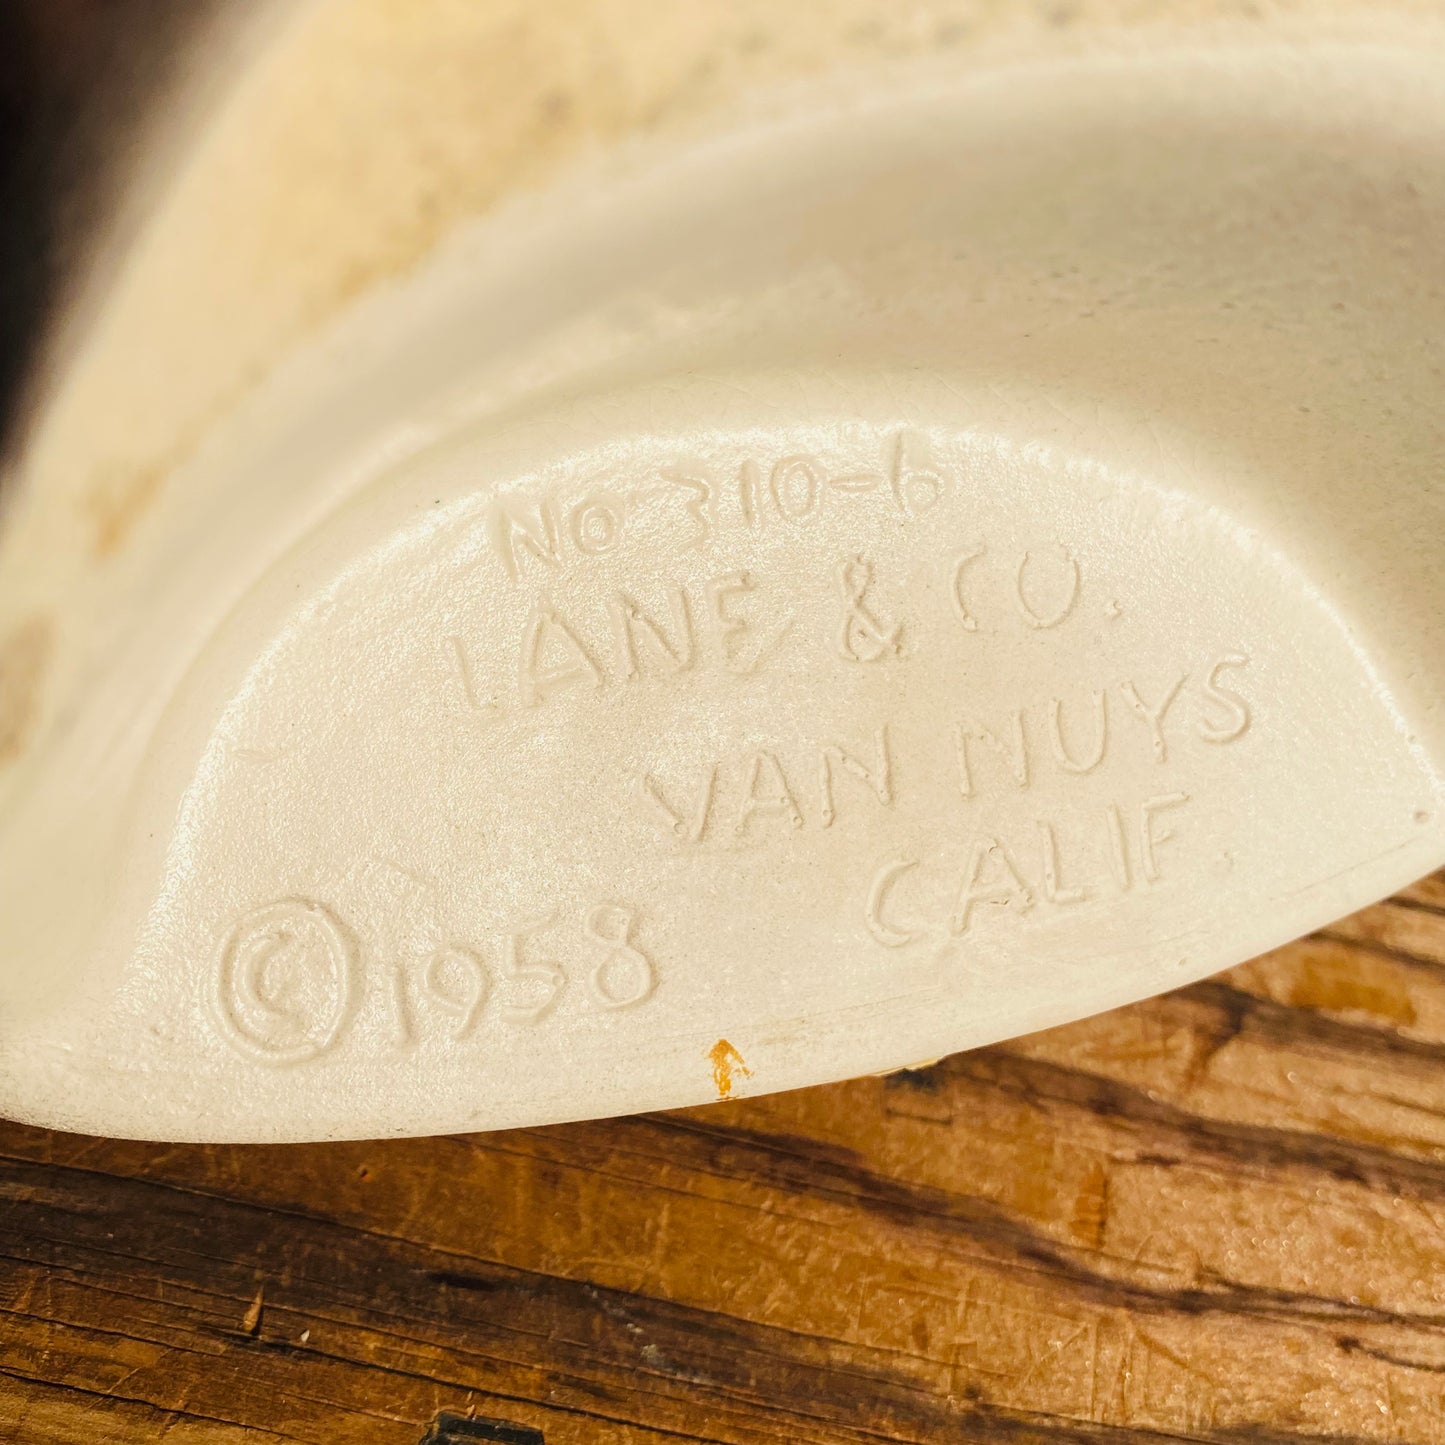 【1958 USA vintage】LANE&CO VANNUYS 猿 灰皿